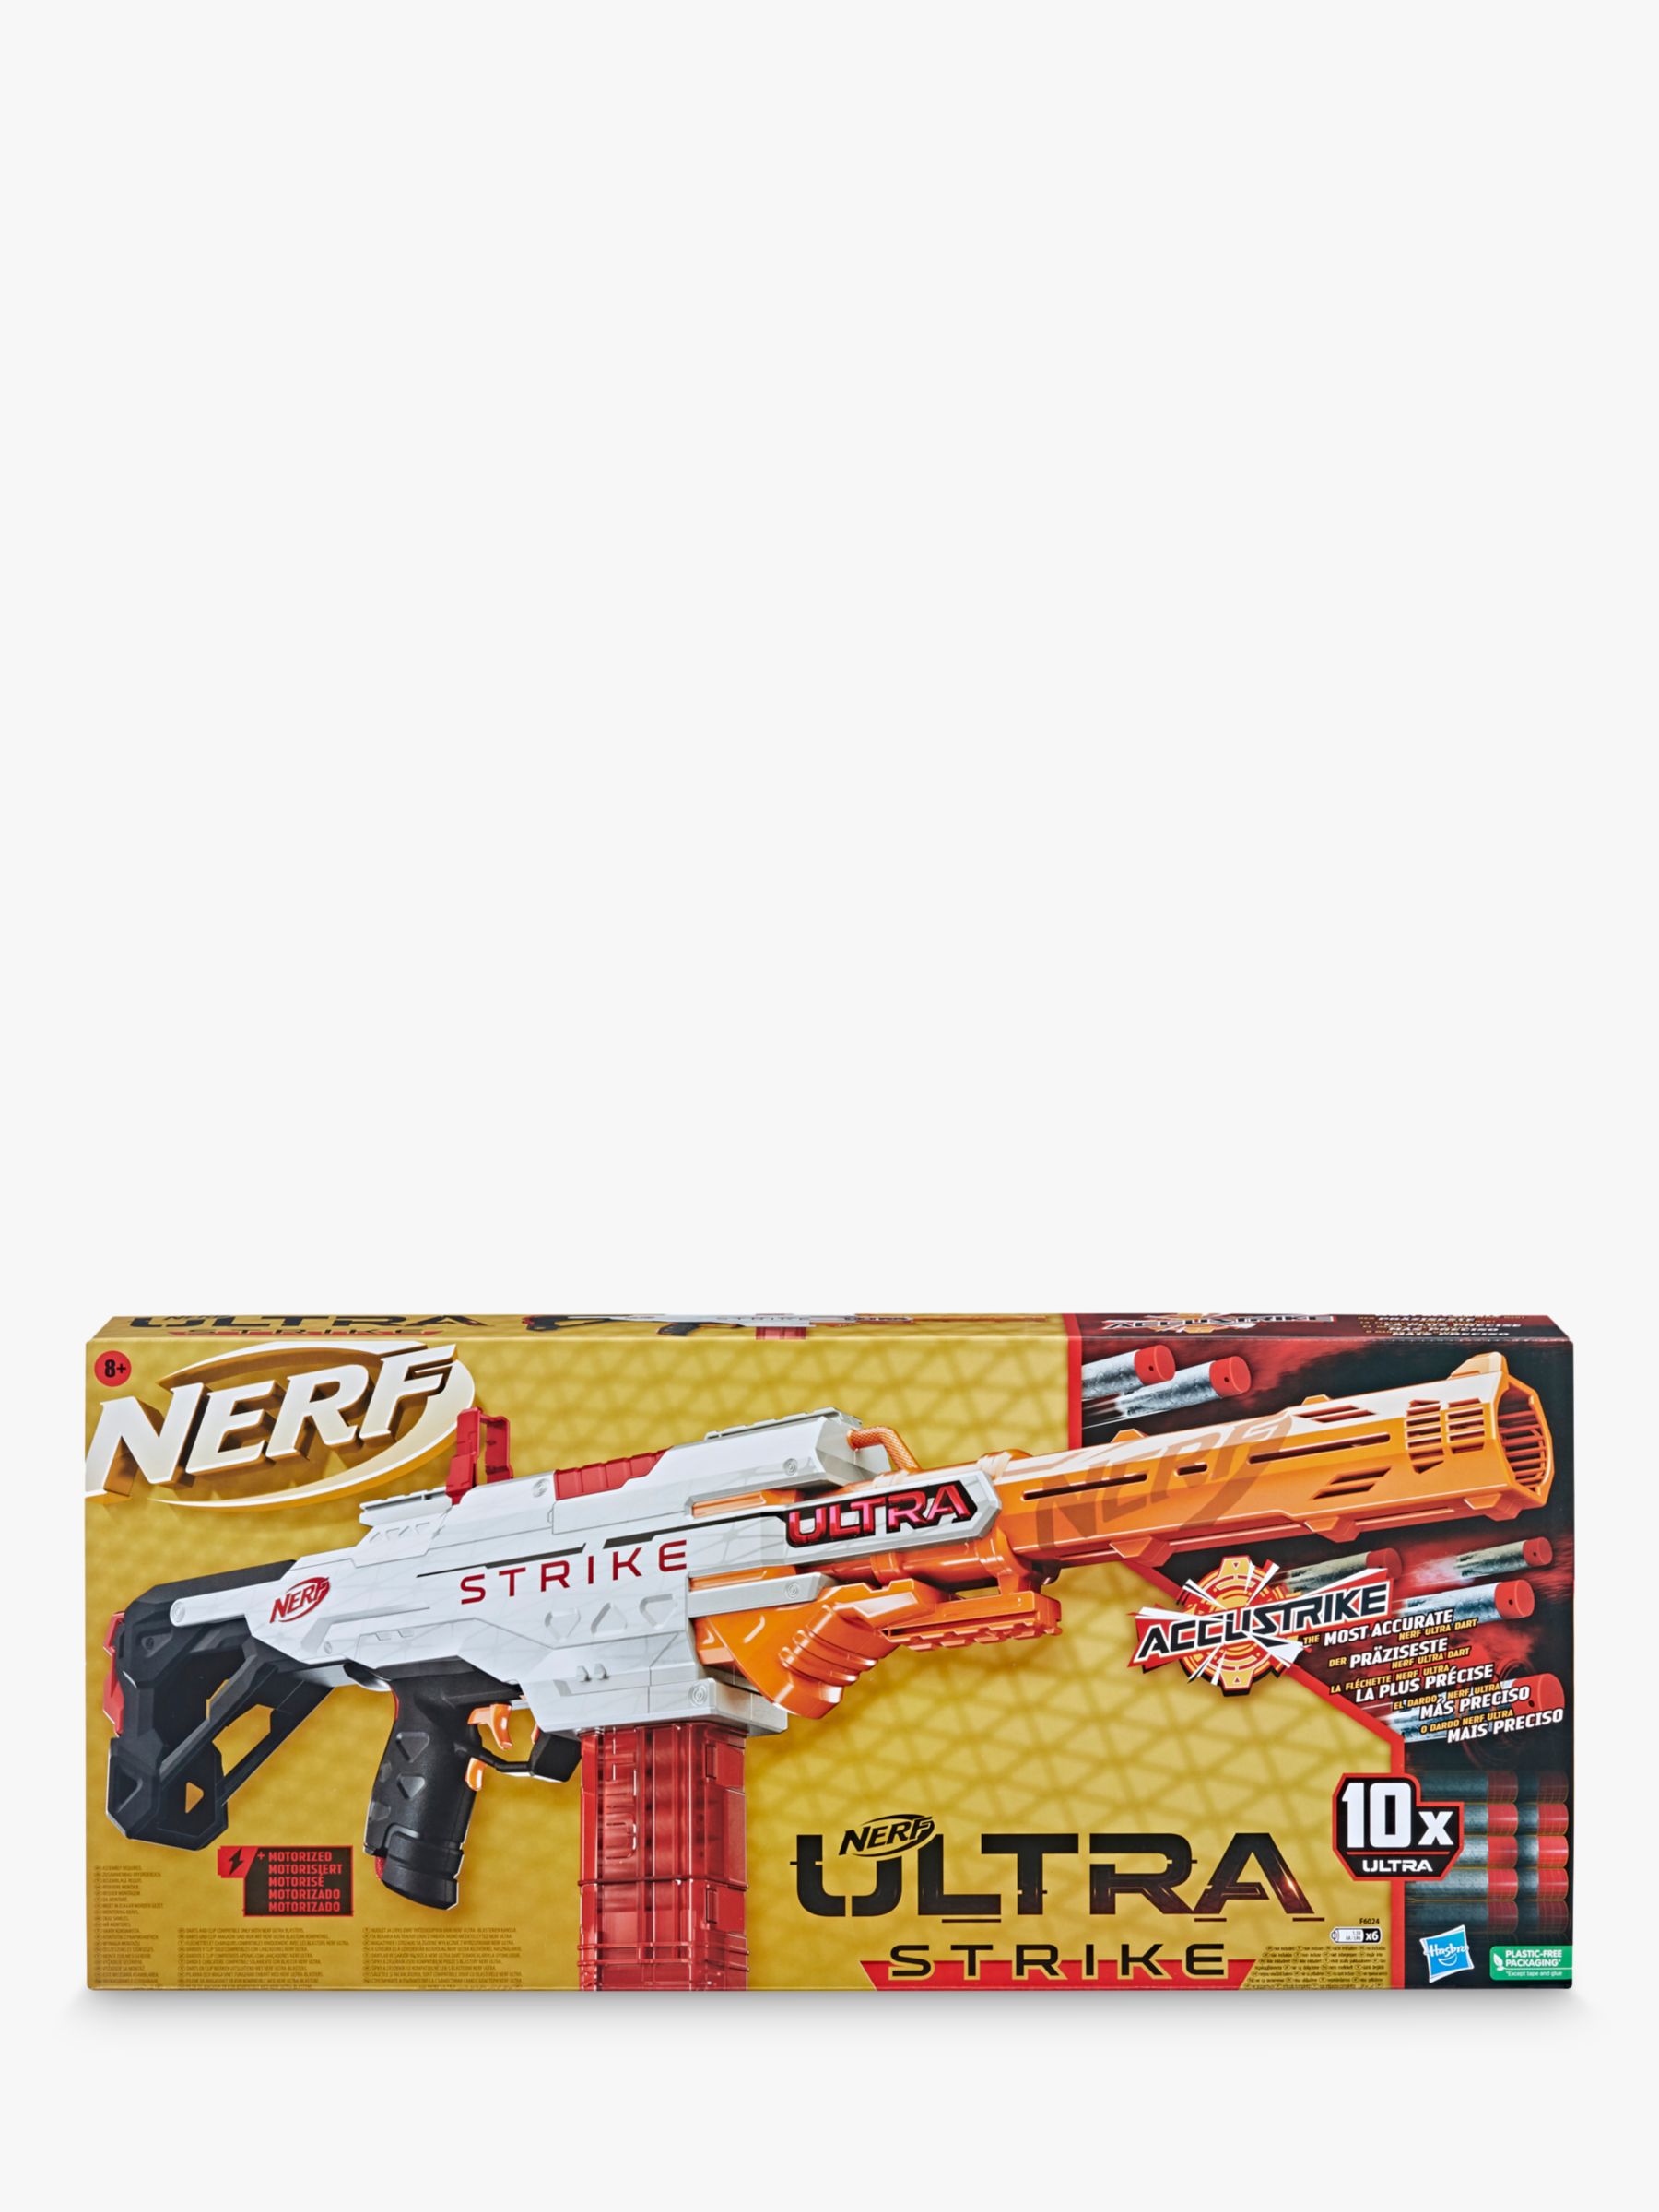 Nerf Ultra Strike Review